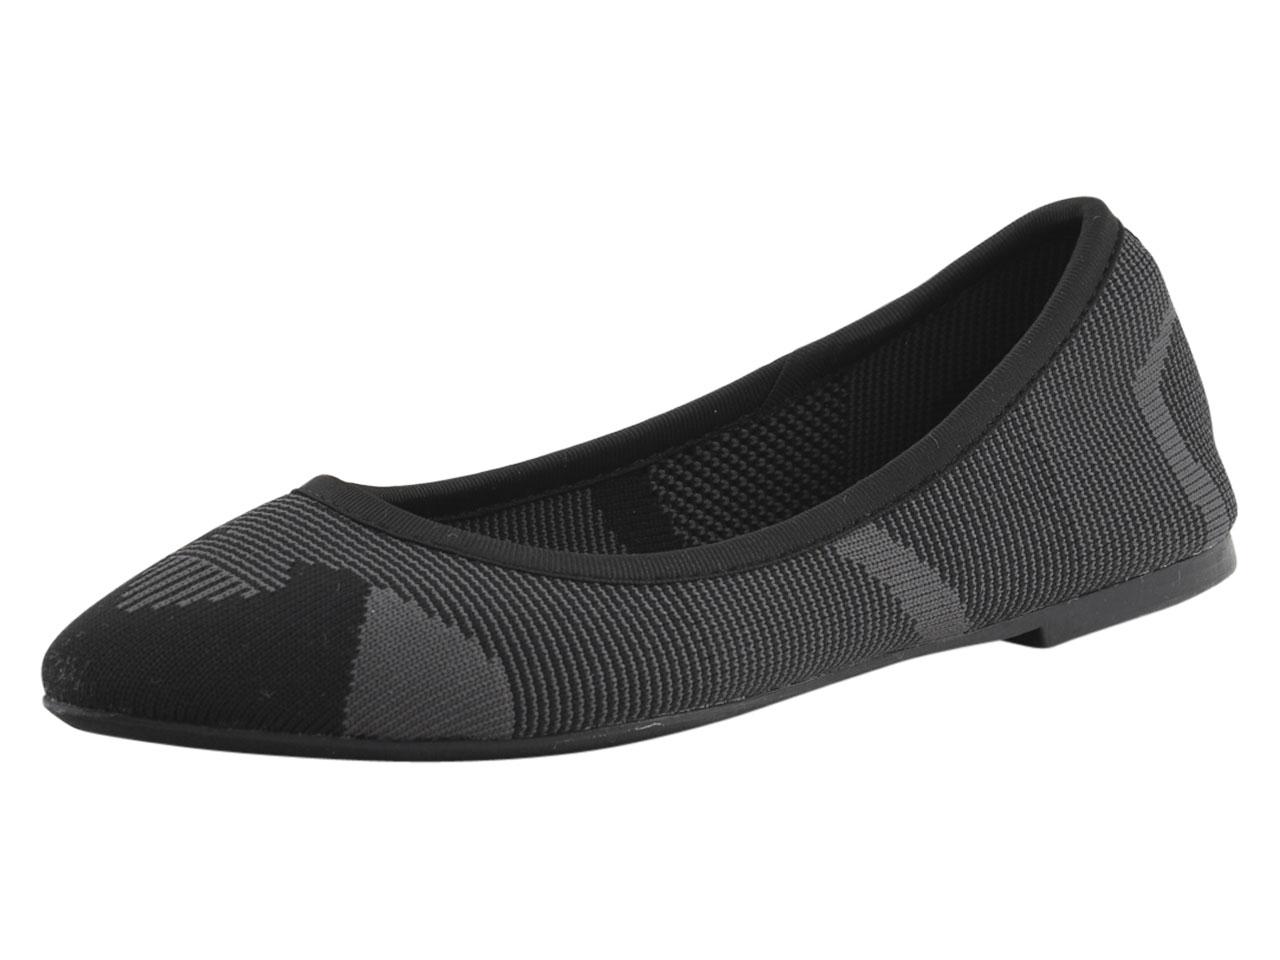 Skechers Women's Cleo Wham Memory Foam Flats Shoes - Black/Charcoal - 6 B(M) US